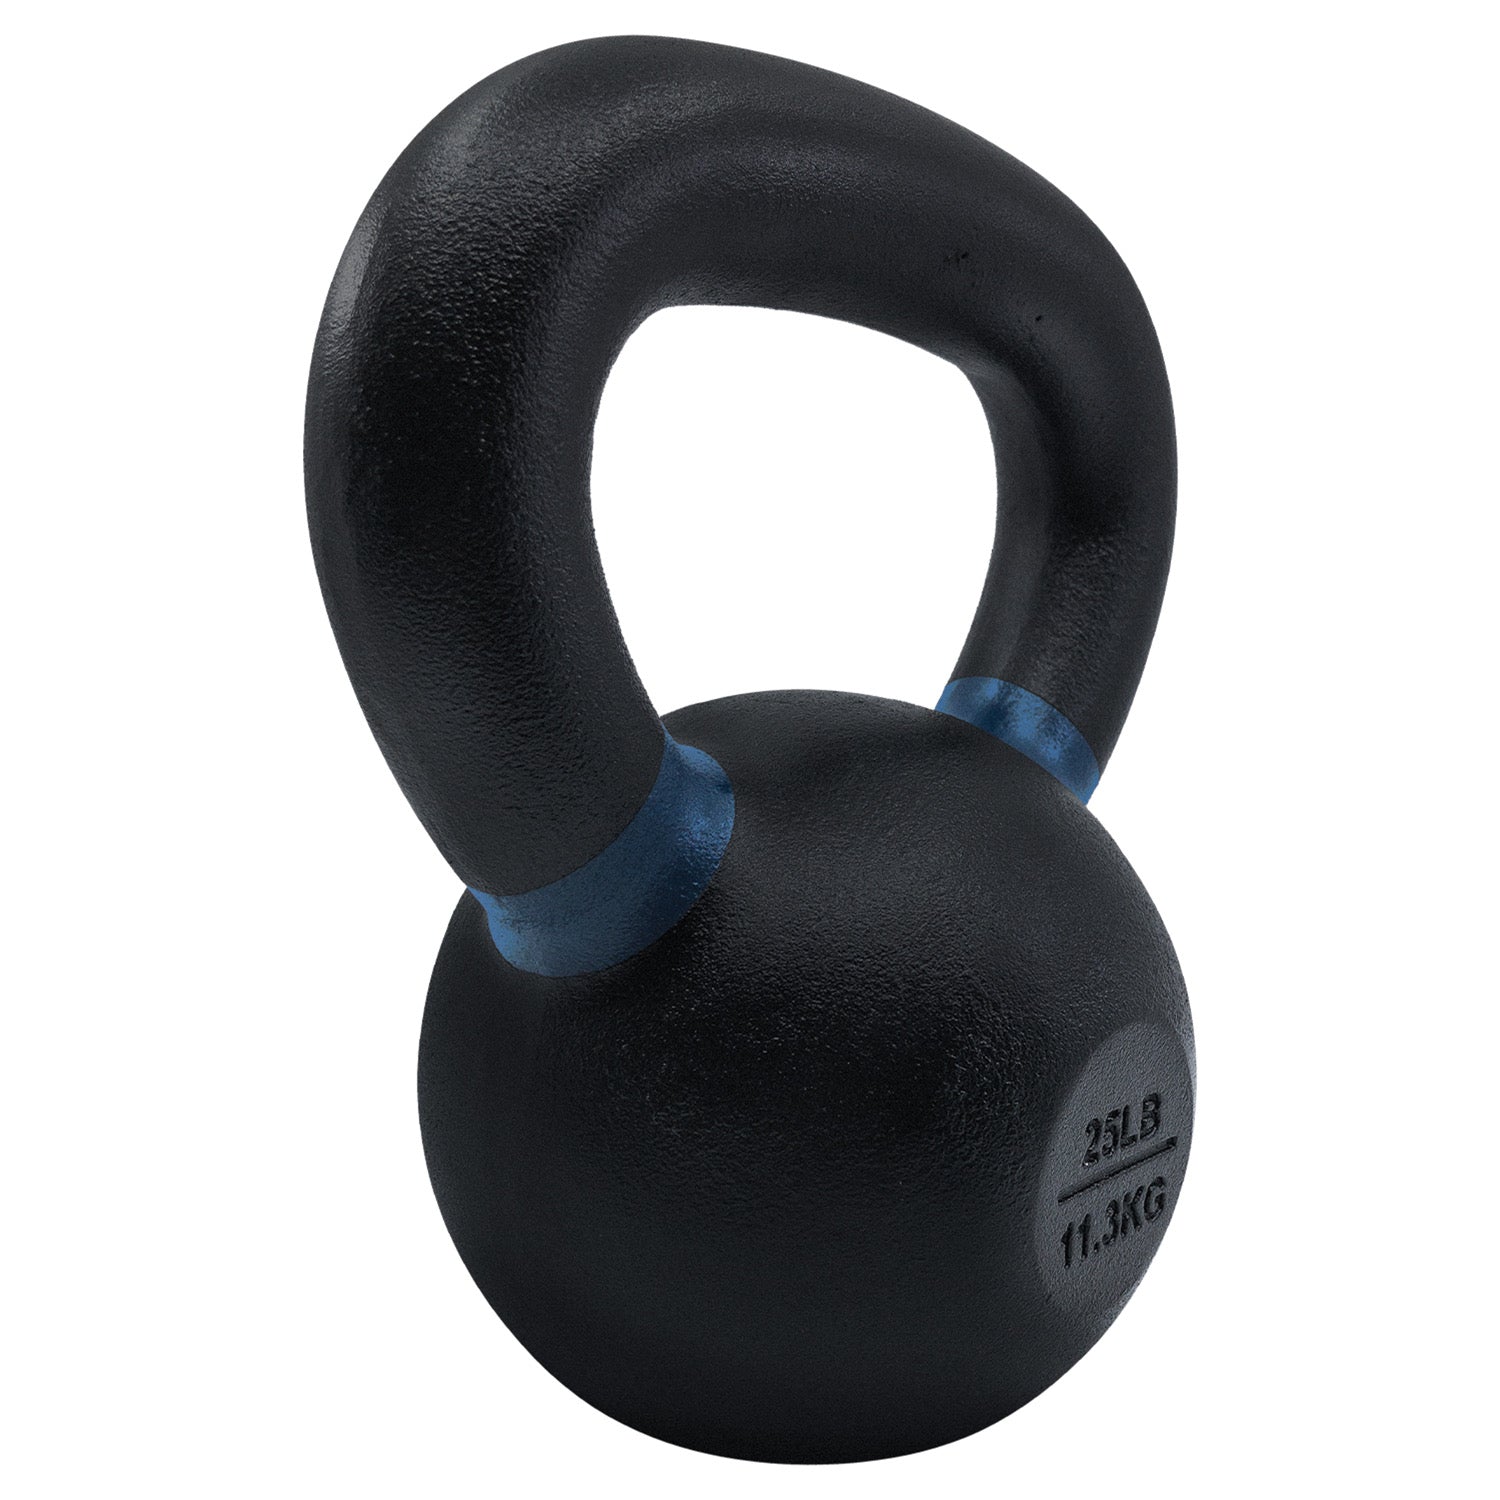 RHINO Fitness® Iron Kettlebell Series 25 lb RHINO Fitness fitness kettlebell Resistance Training